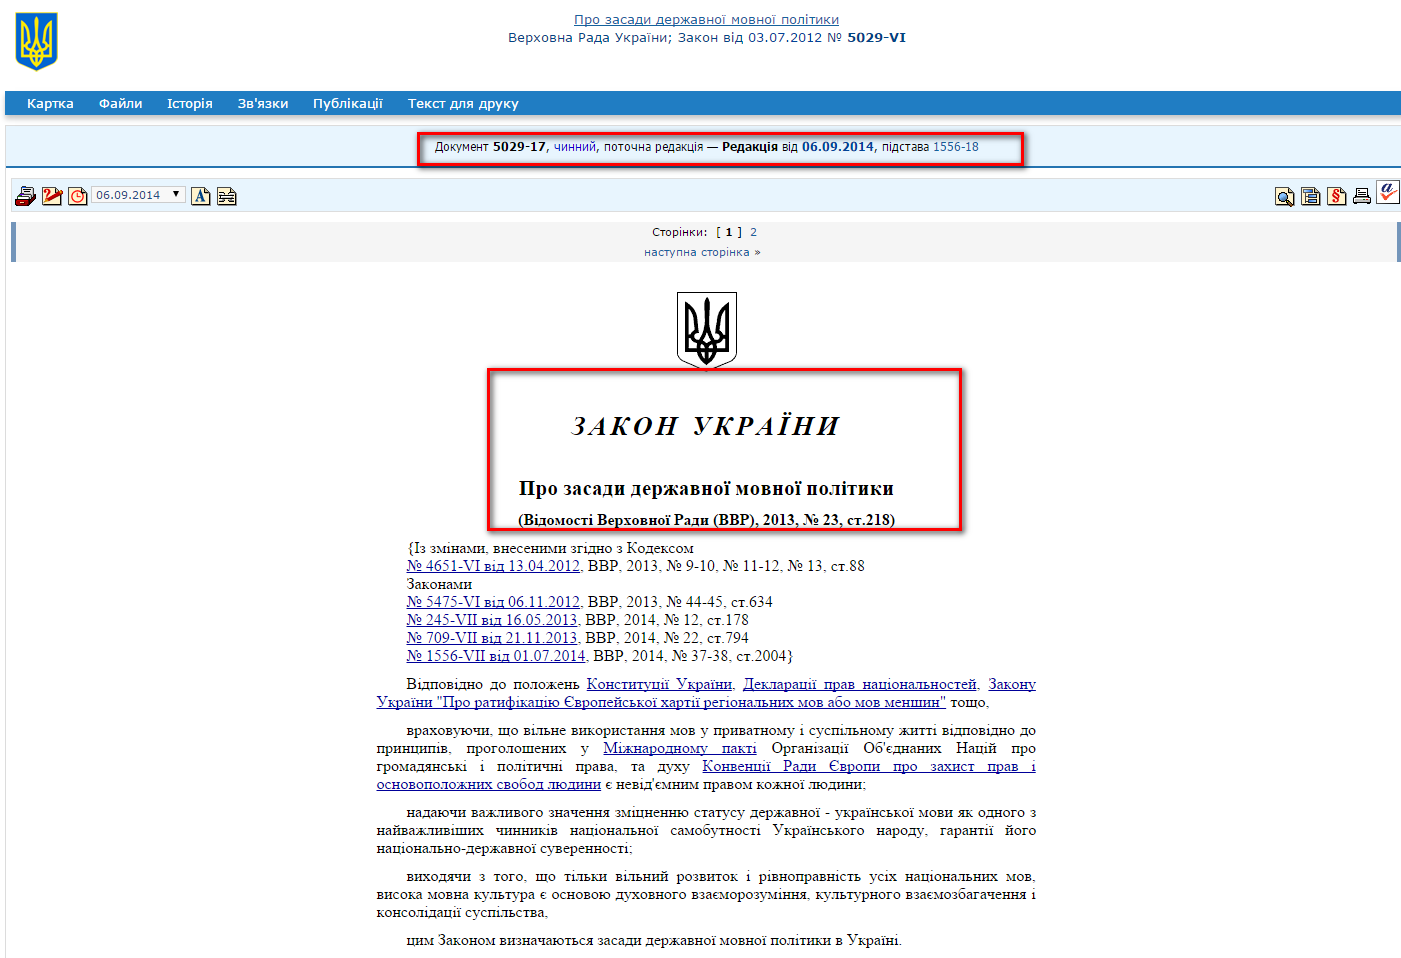 http://zakon1.rada.gov.ua/laws/show/5029-vi